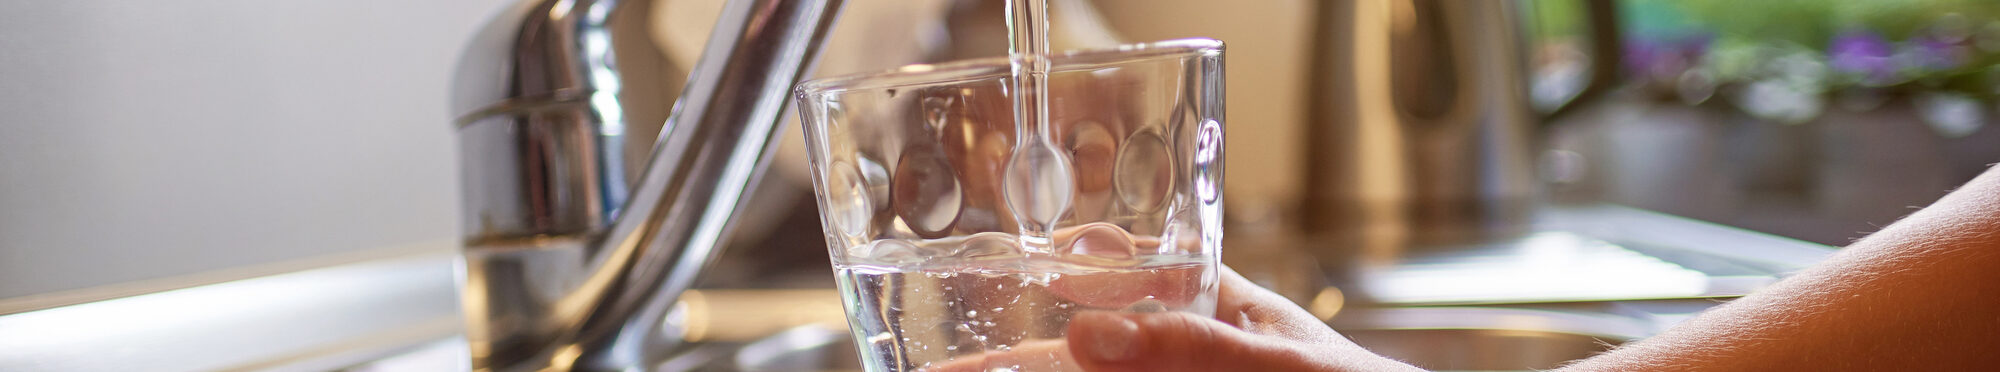 Motivbild Trinkwasser [Foto: ©samopauser, stock.adobe.com]